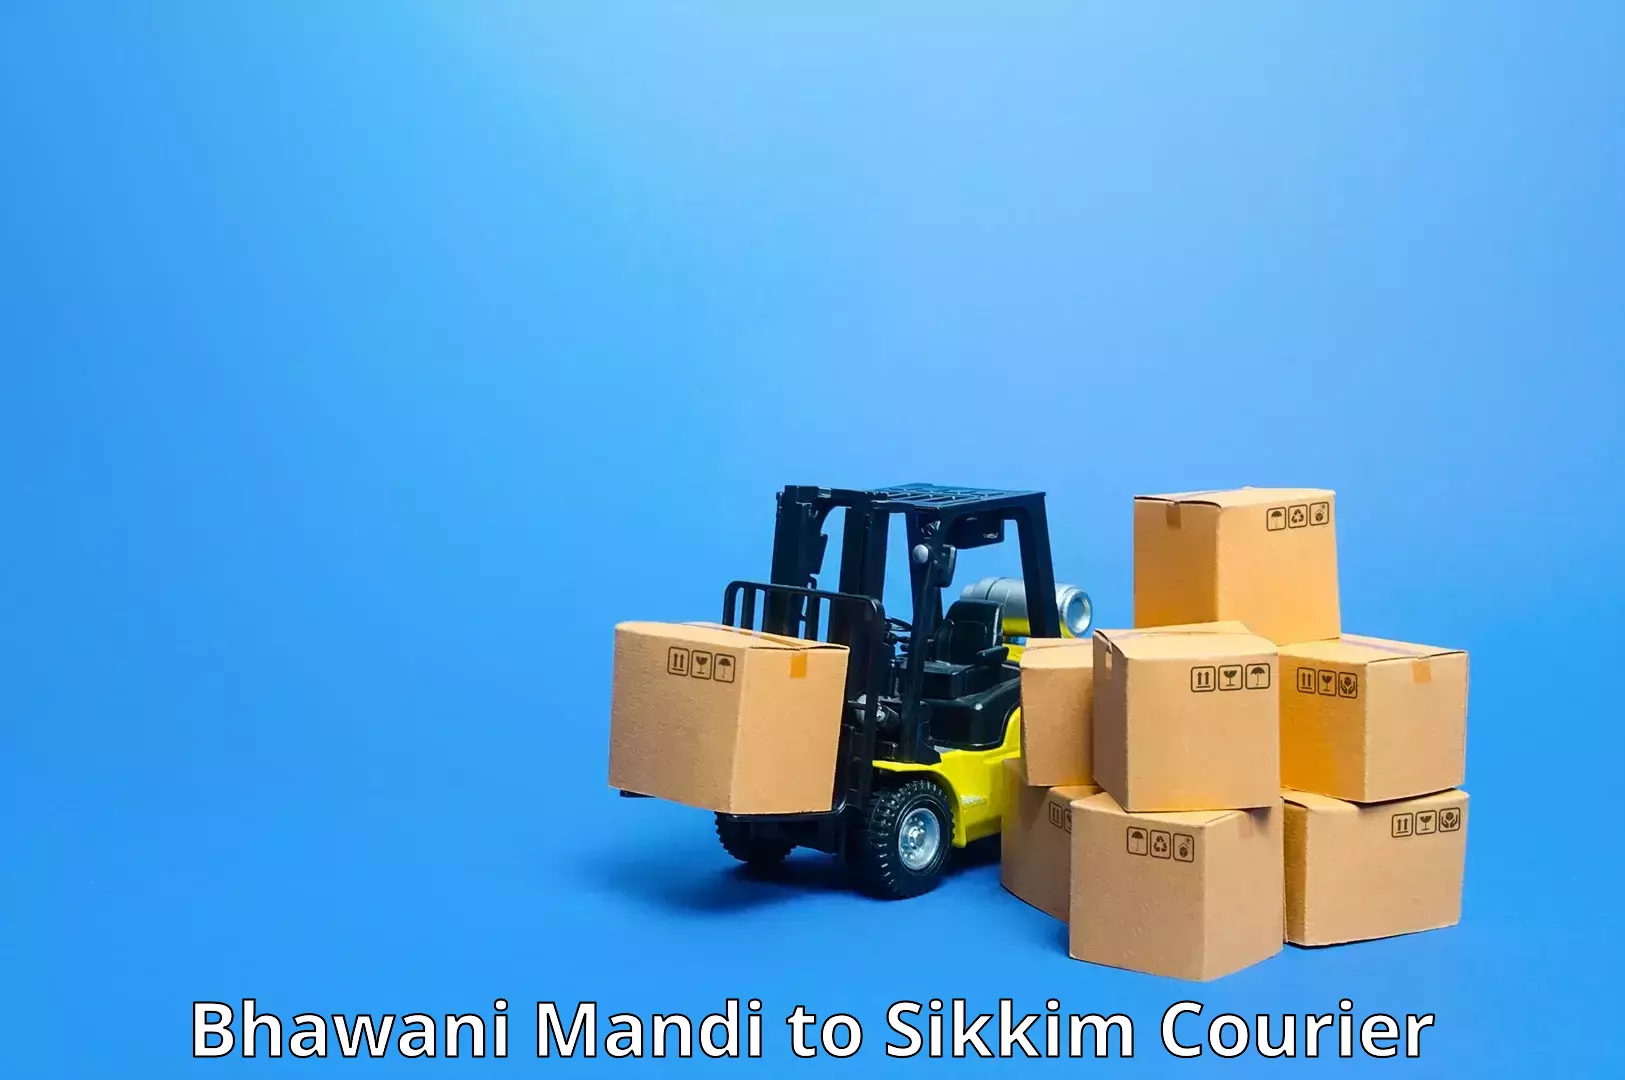 Flexible delivery scheduling Bhawani Mandi to Rangpo